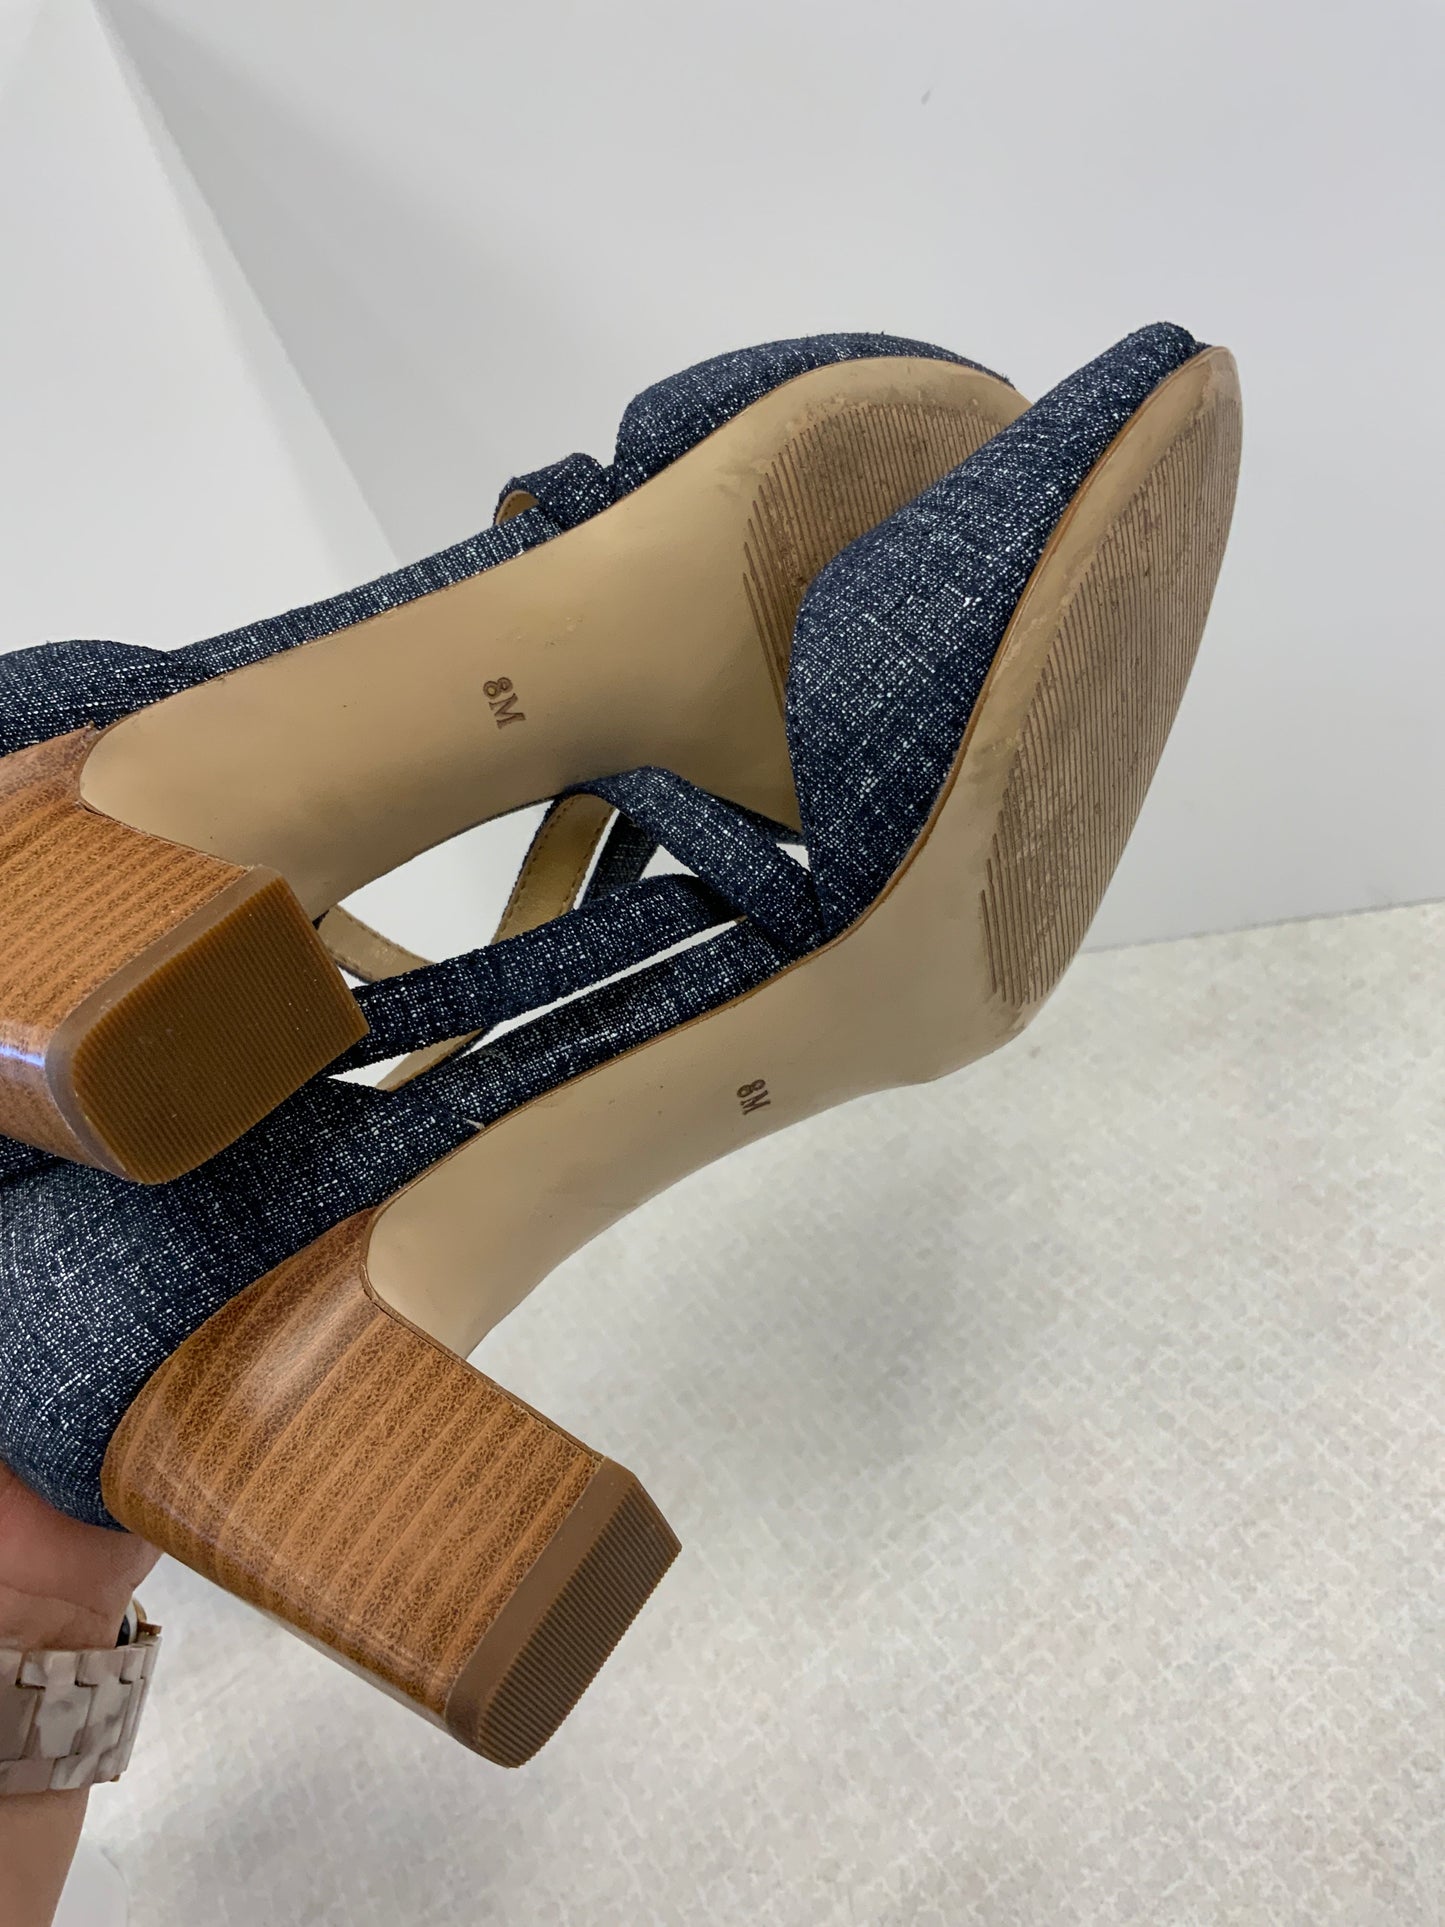 Blue Denim Sandals Heels Block Talbots, Size 8